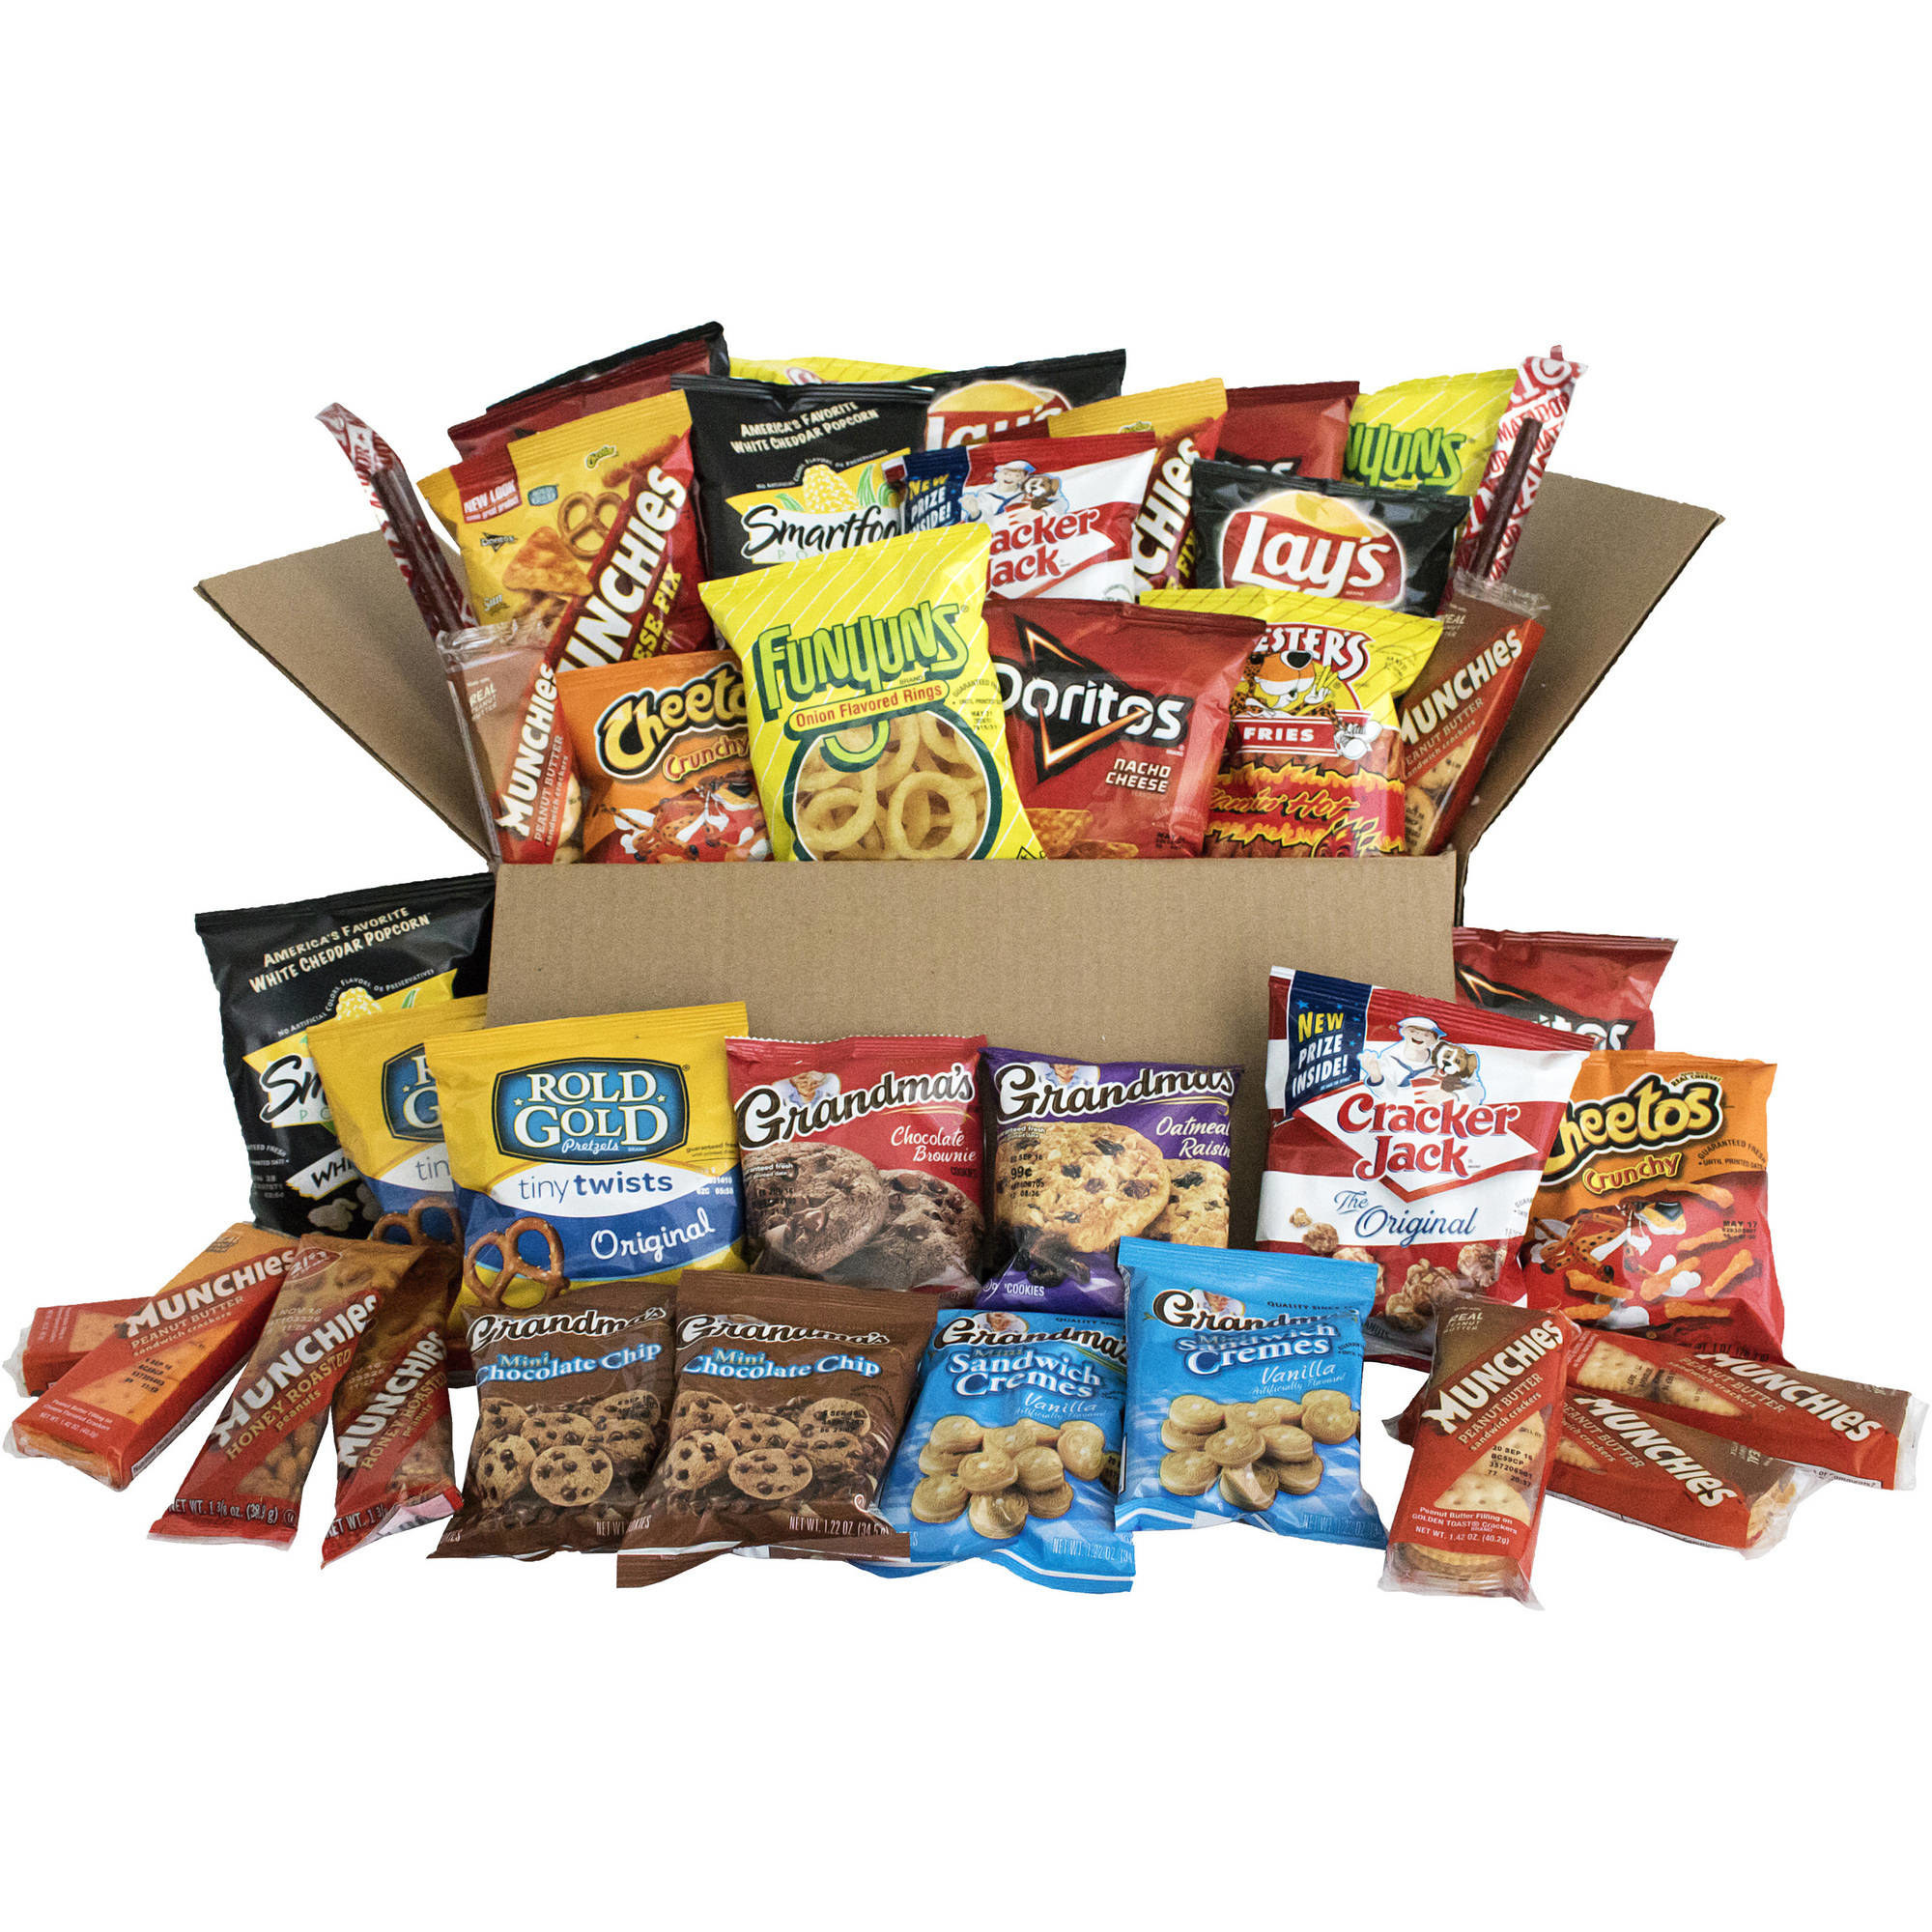 Box of snacks on white background